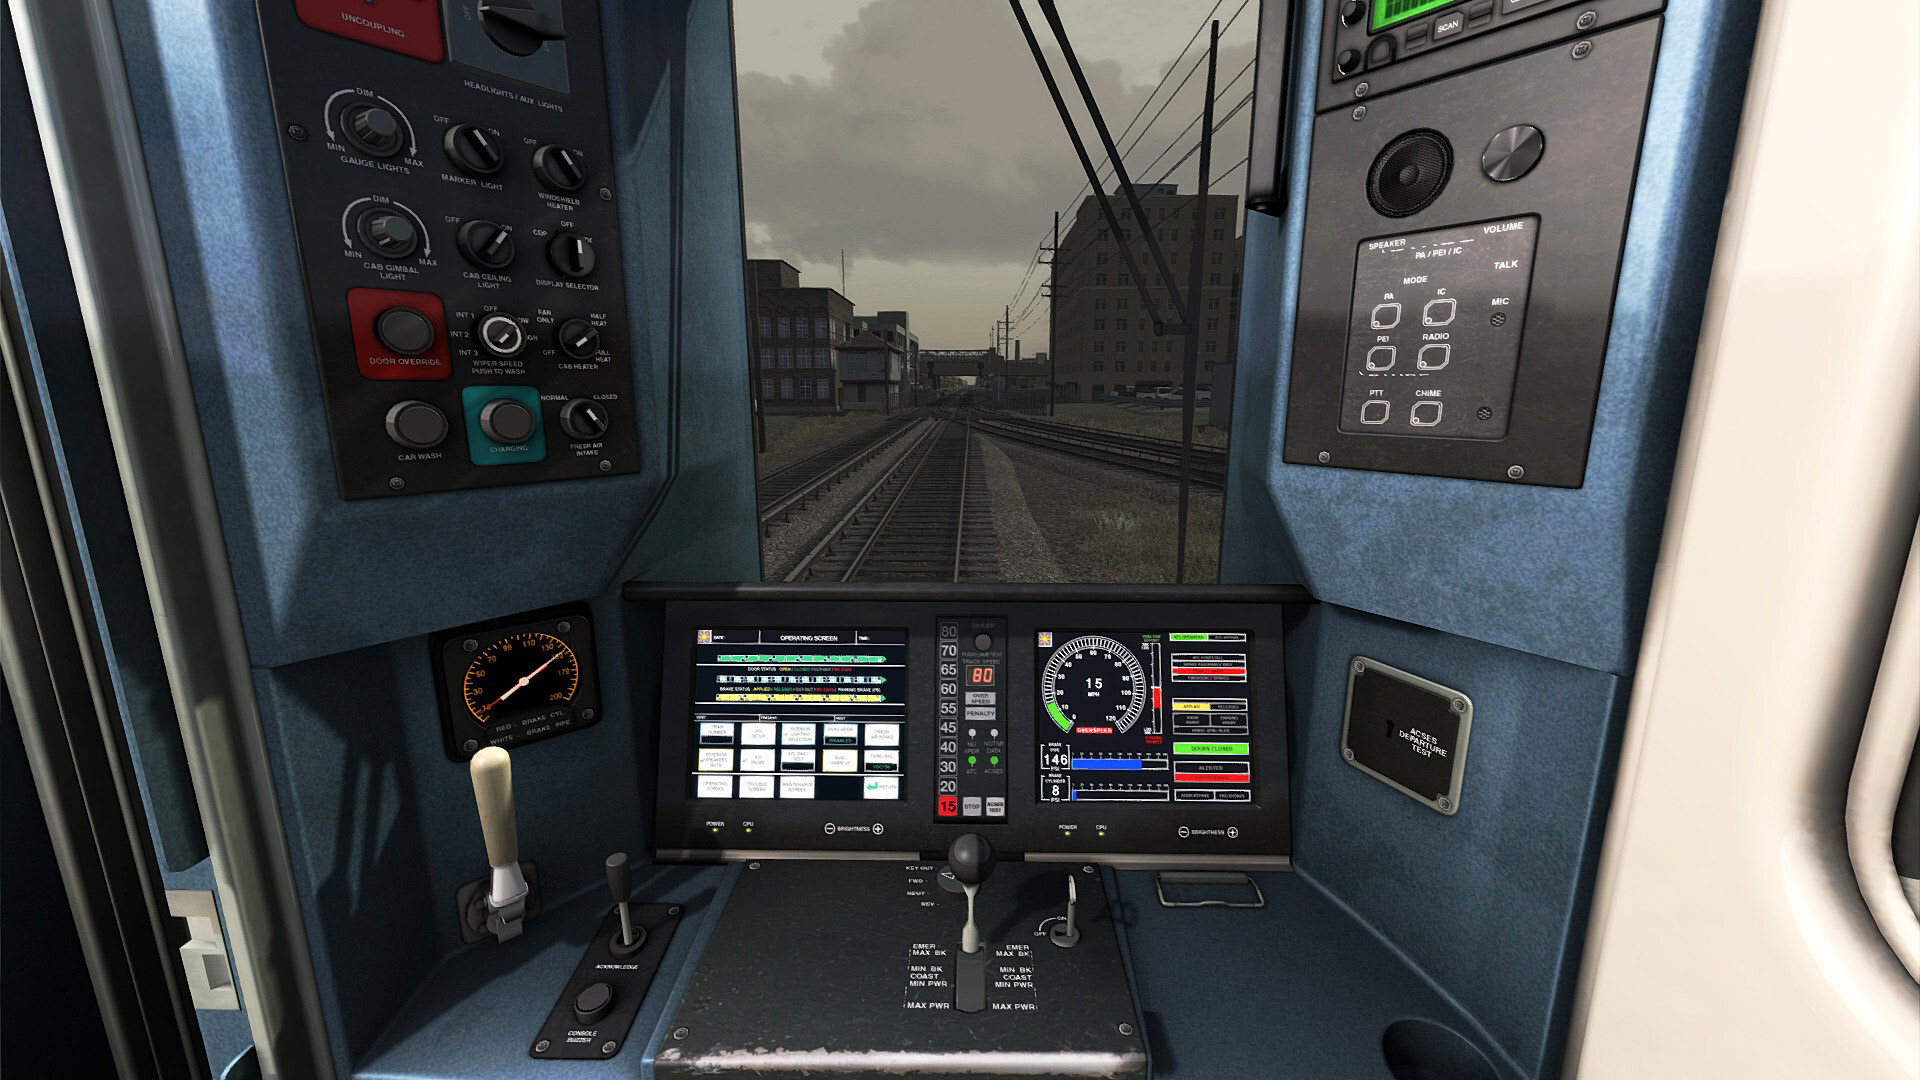 Train Simulator Classic (2023) Bundle Steam CD Key